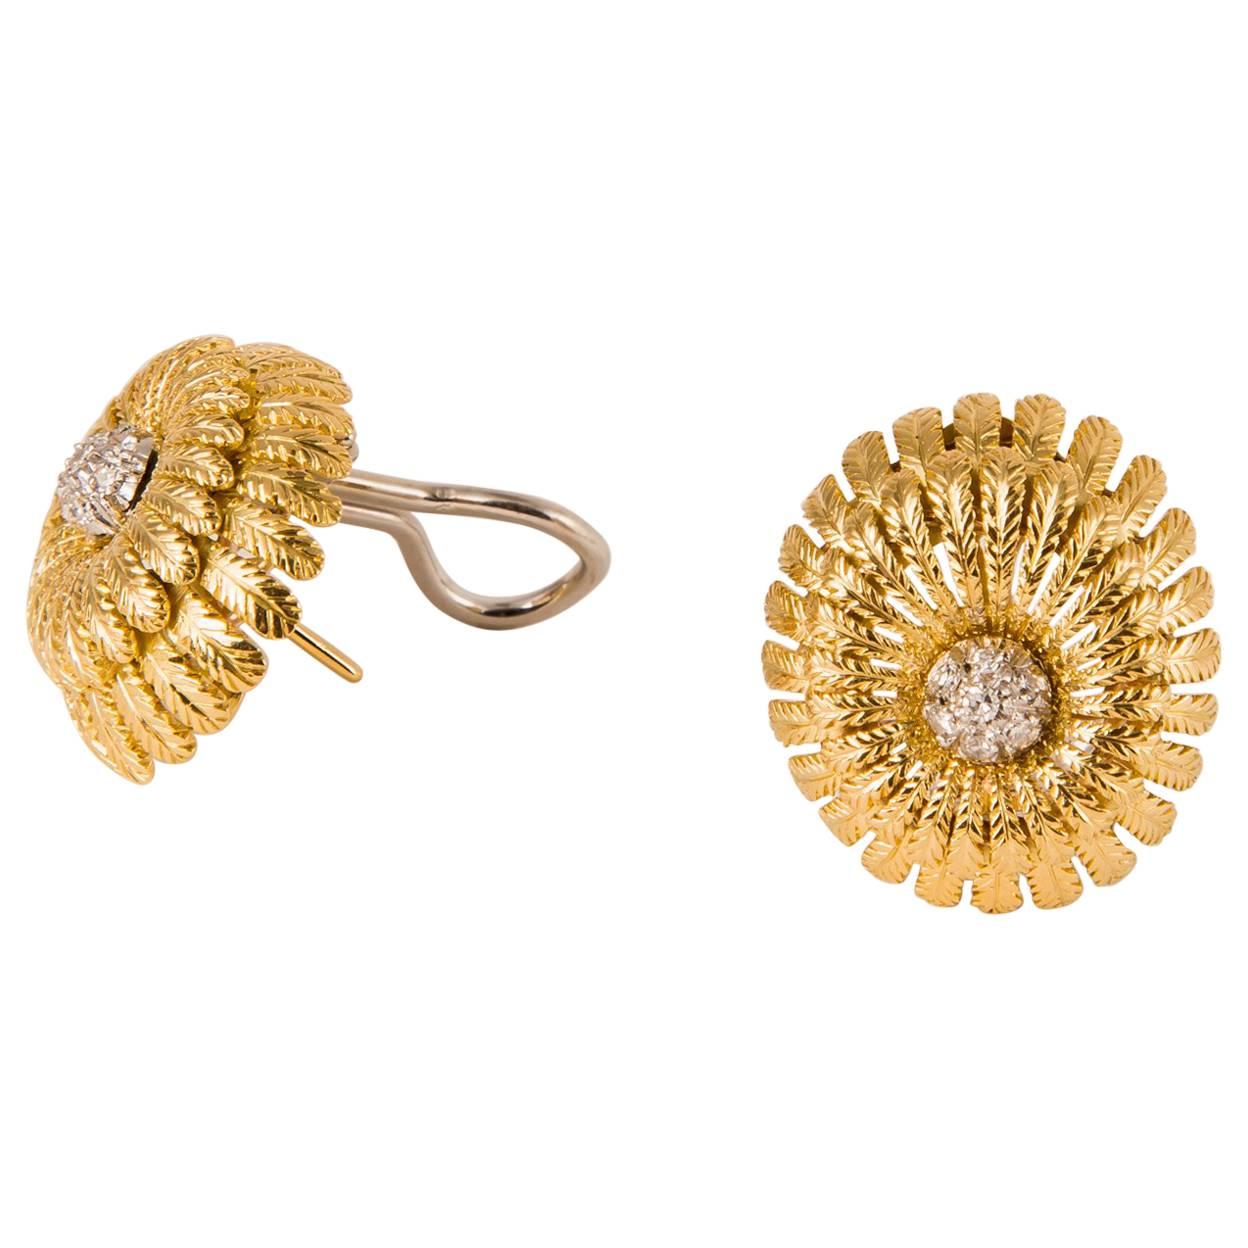 Elegant Italian Gold and Diamond Earrings